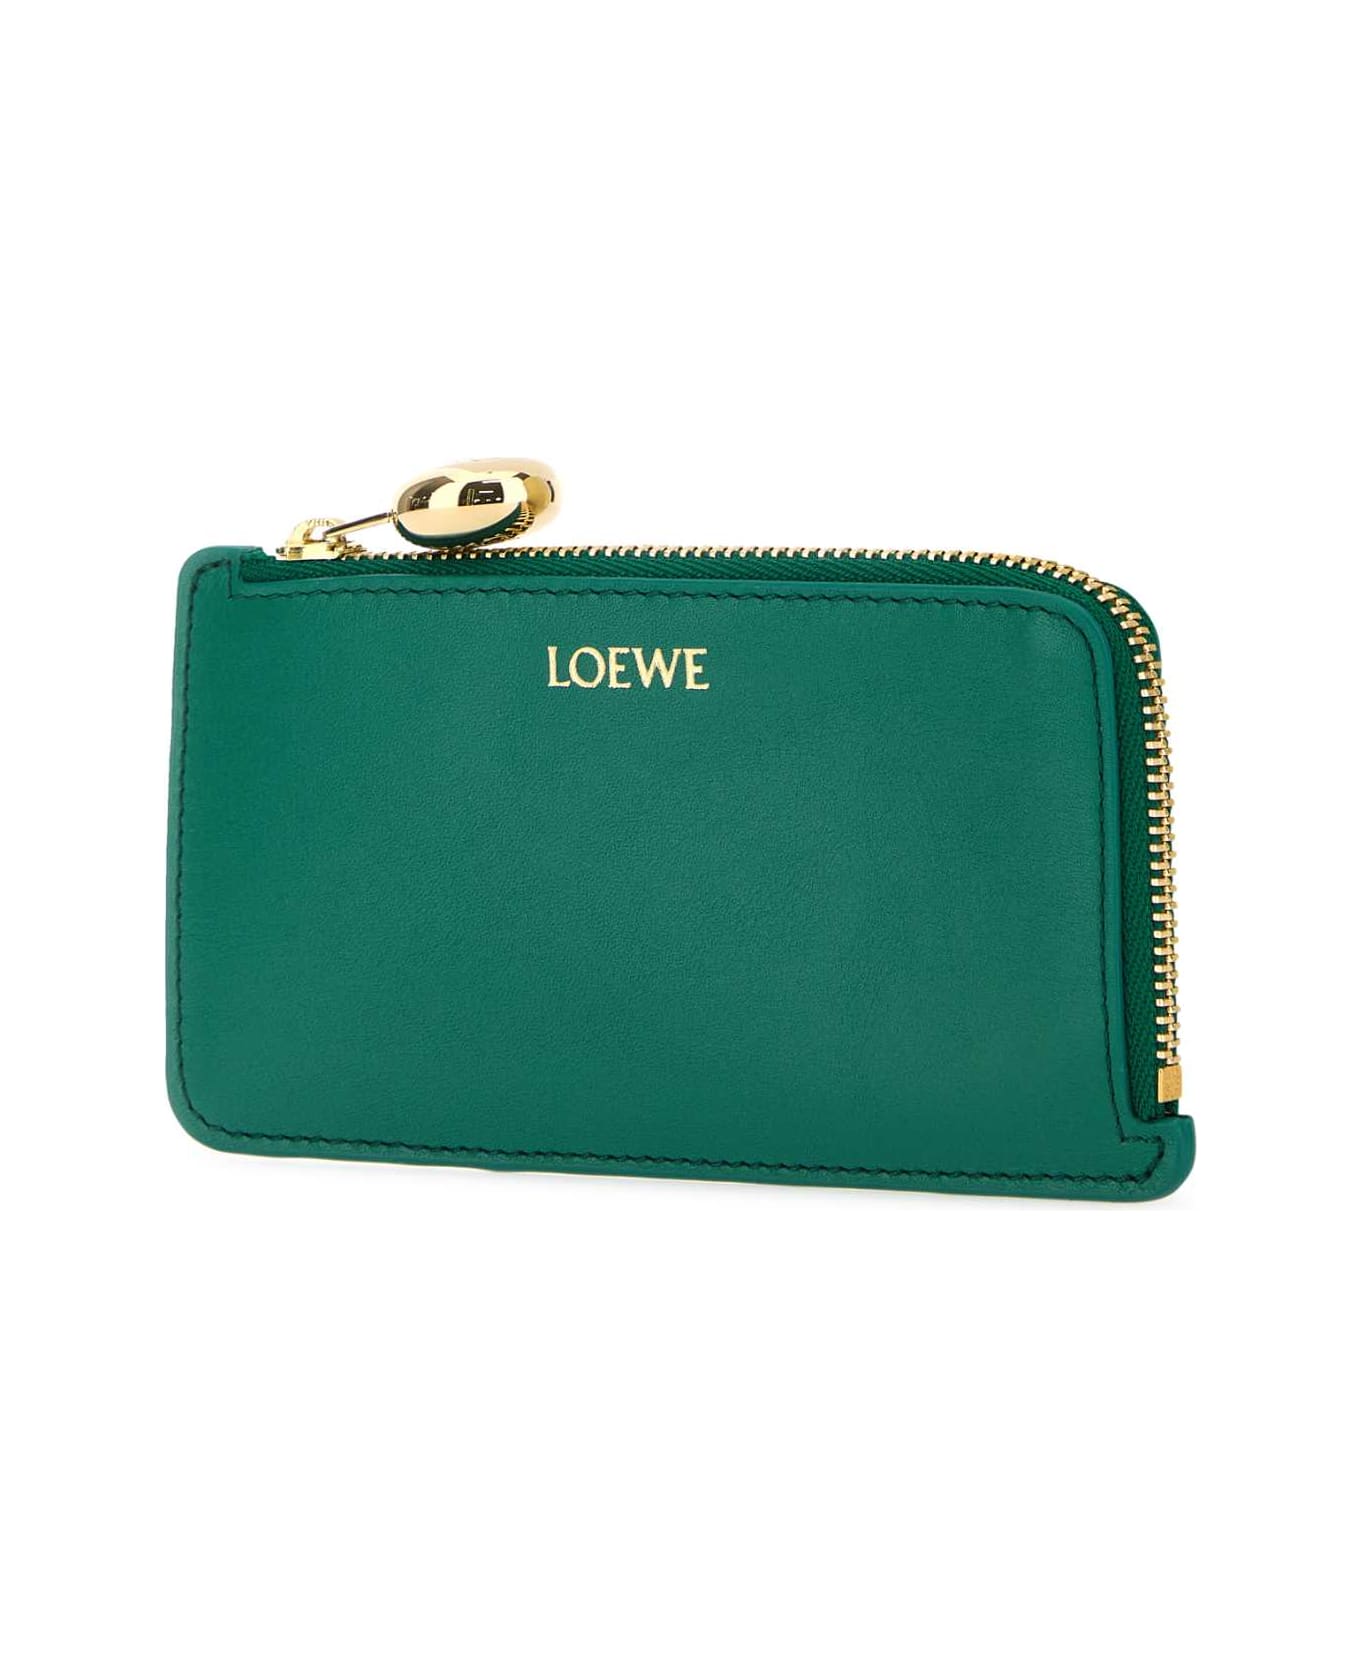 Loewe Emerald Green Leather Card Holder - EMERALDGREEN 財布